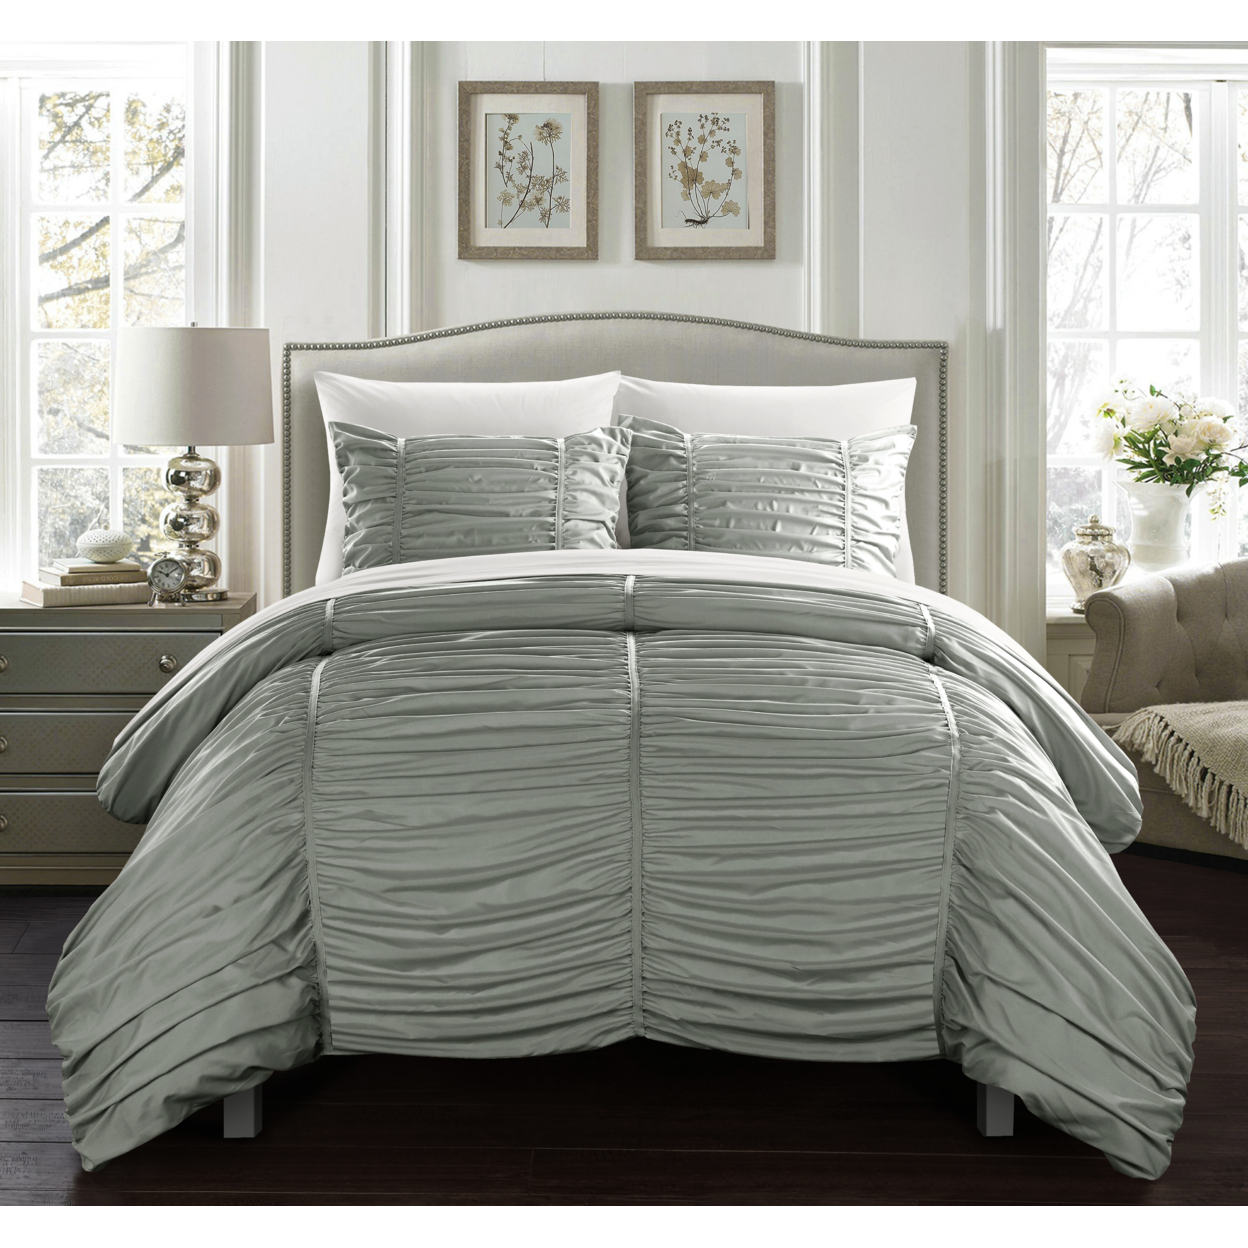 Kiela 2 Pc Or 3 Pc Ruched Comforter Set - Grey, King